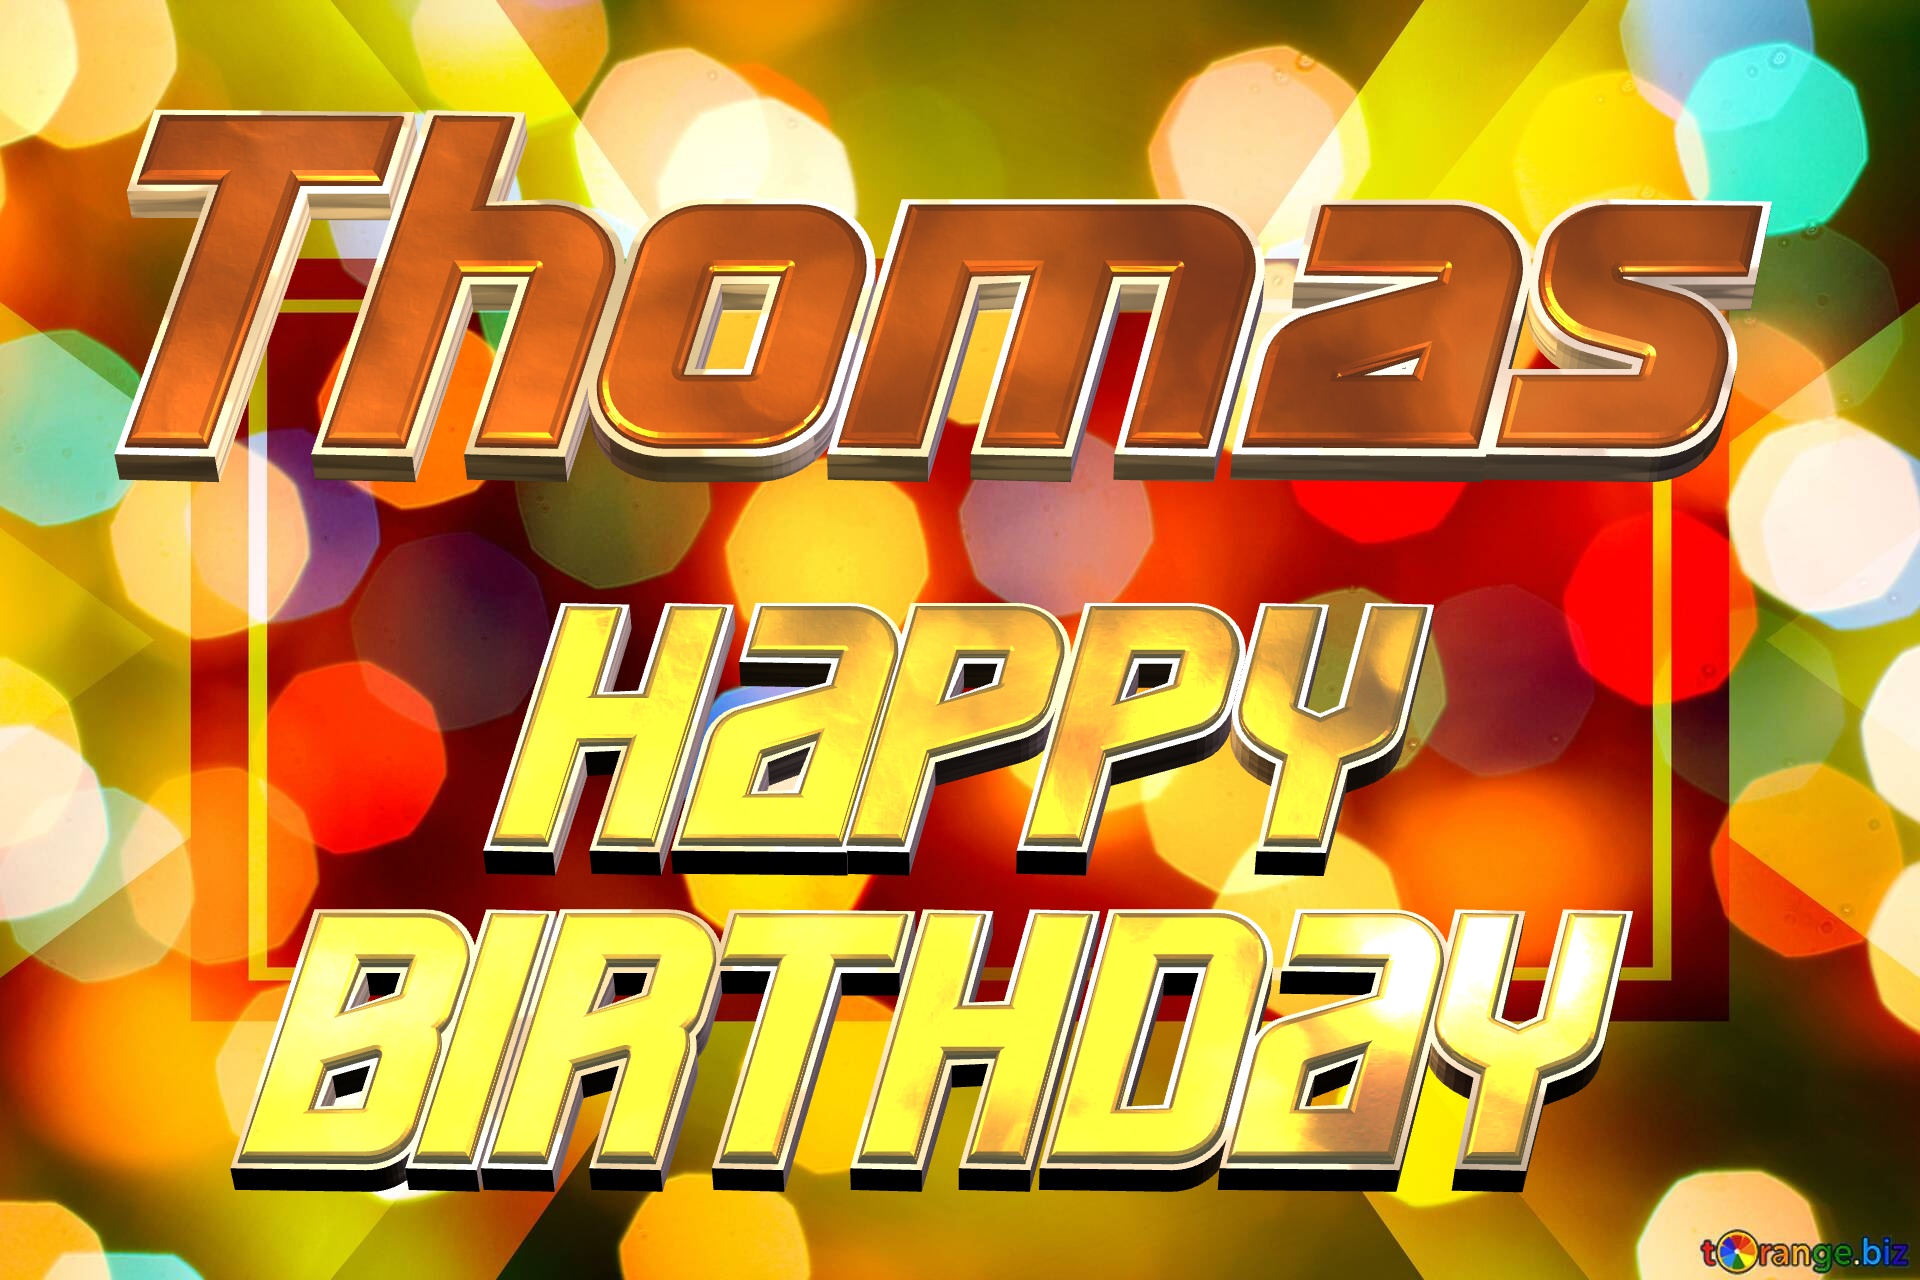 Thomas Happy Birthday Background of bright lights Responsive Design Layout №0